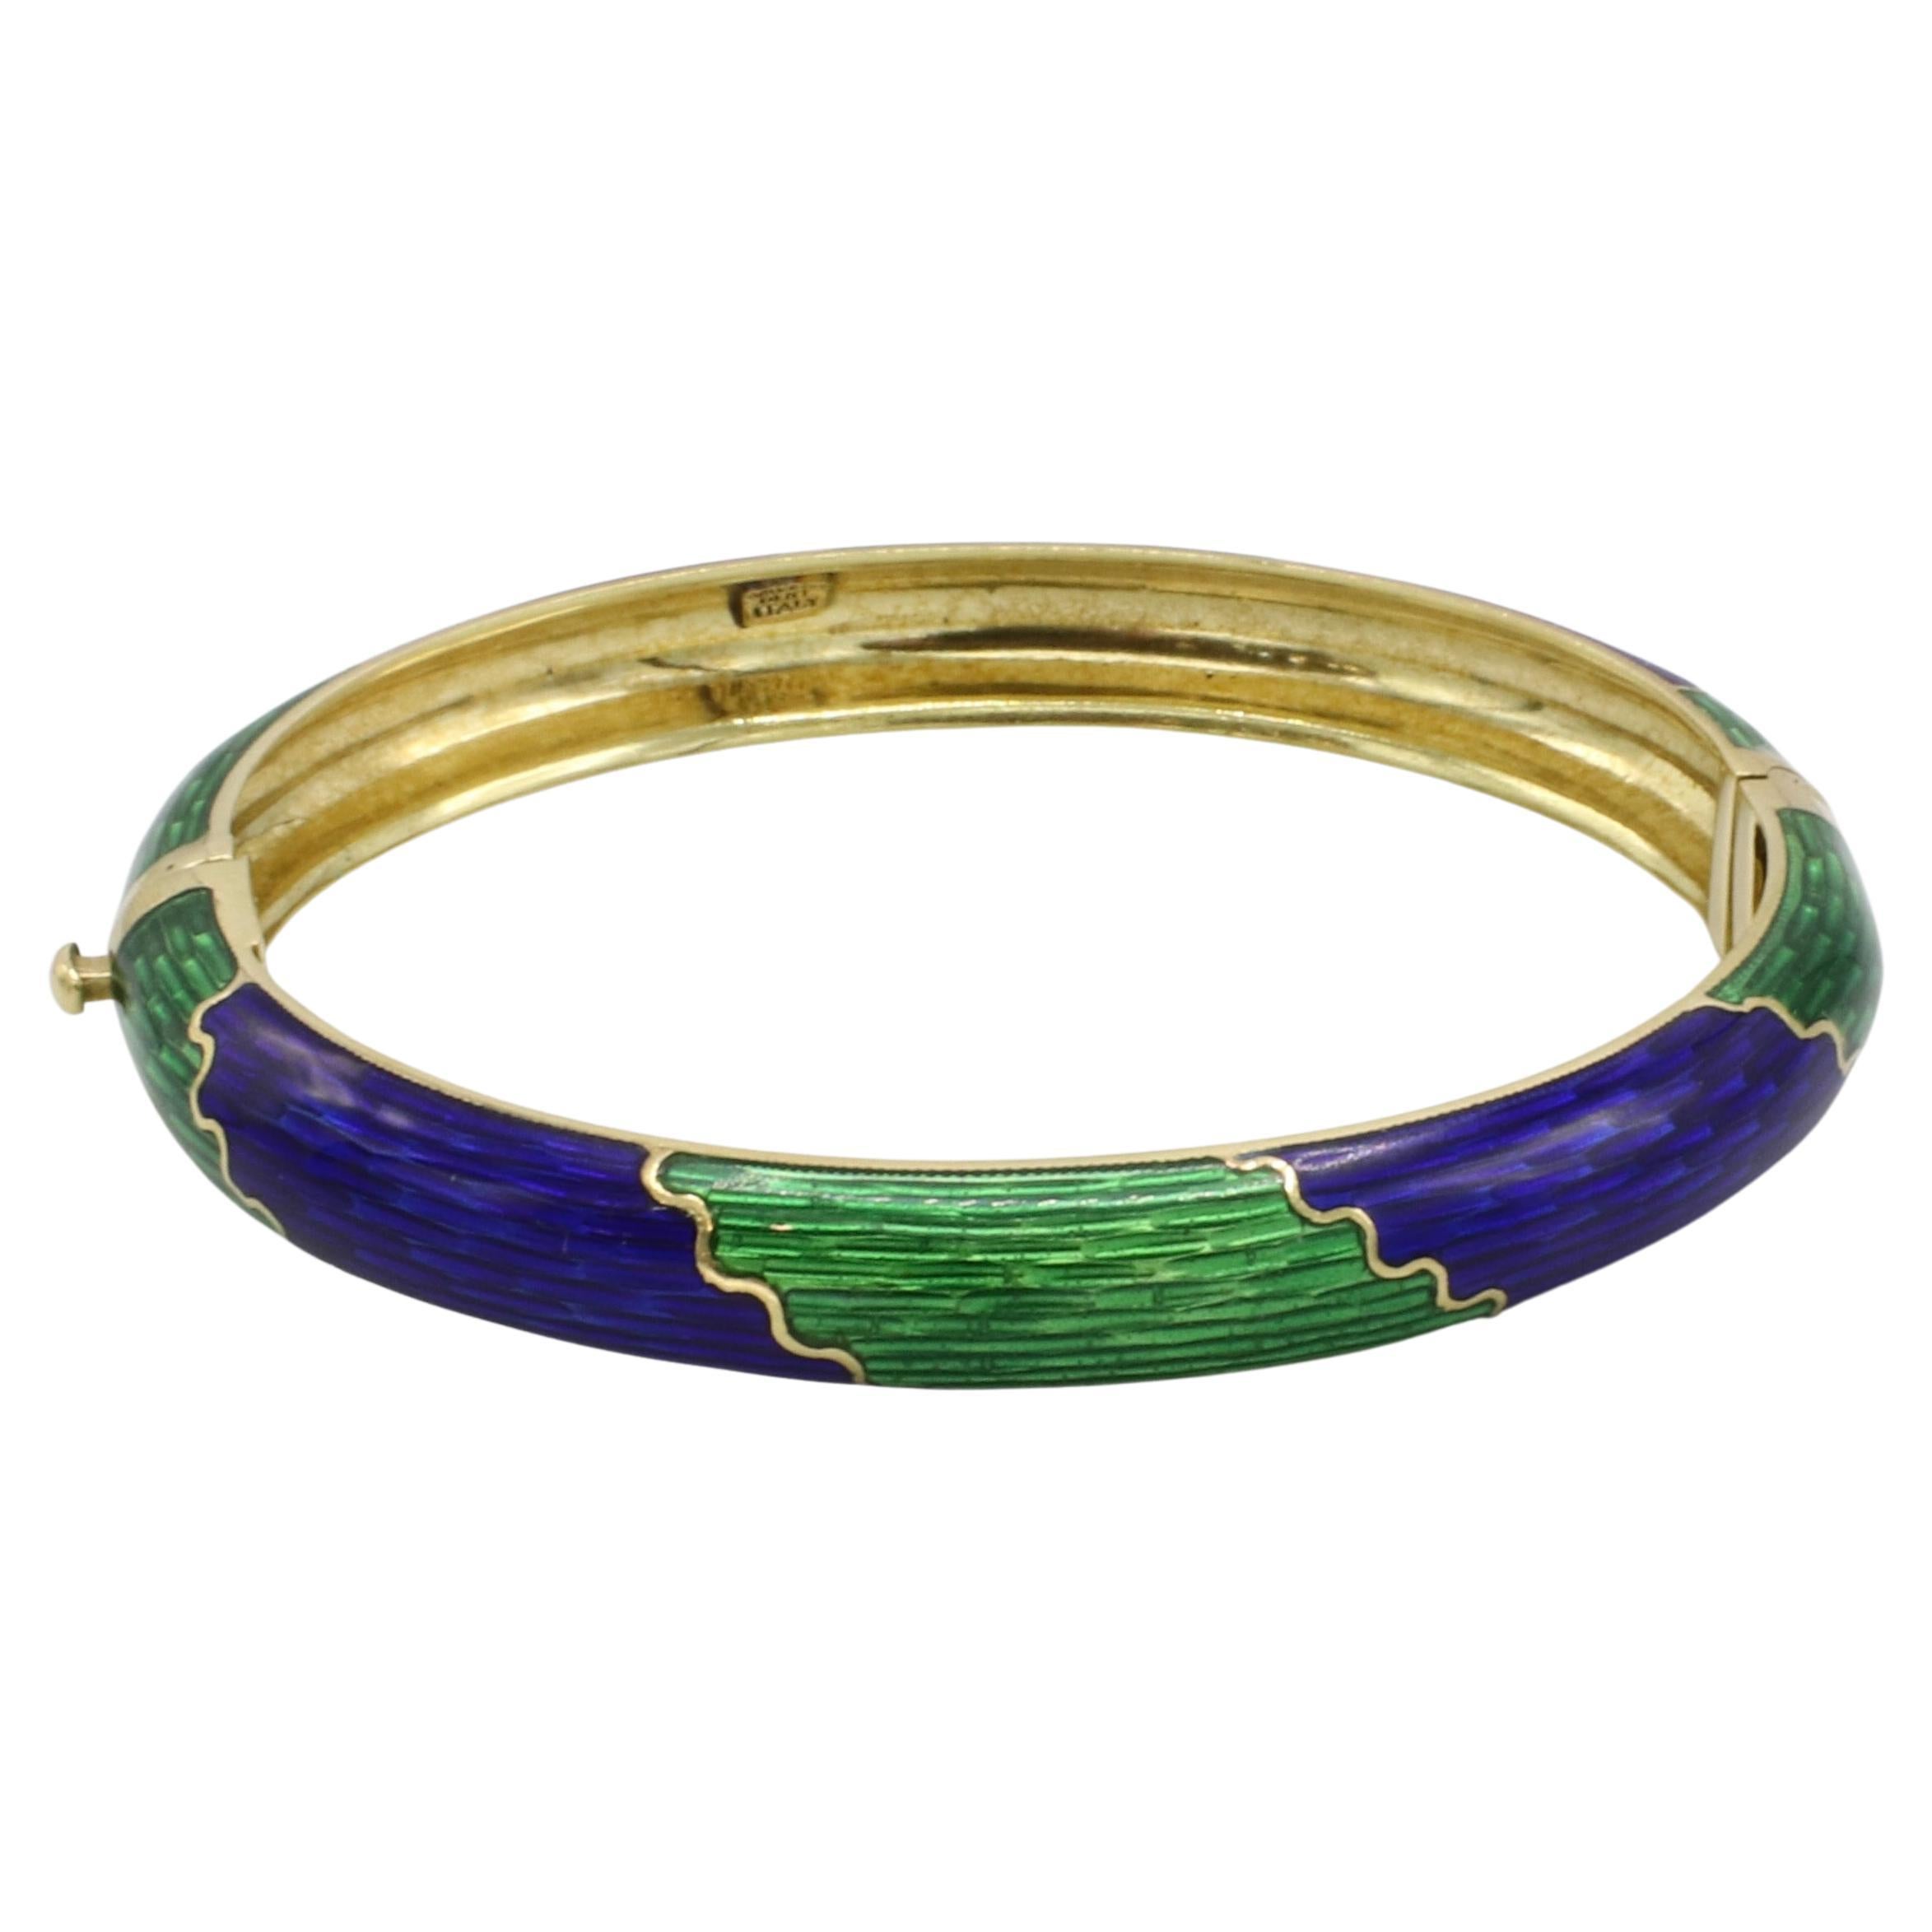 Corletto 18 Karat Yellow Gold Blue & Green Enamel Bangle Bracelet